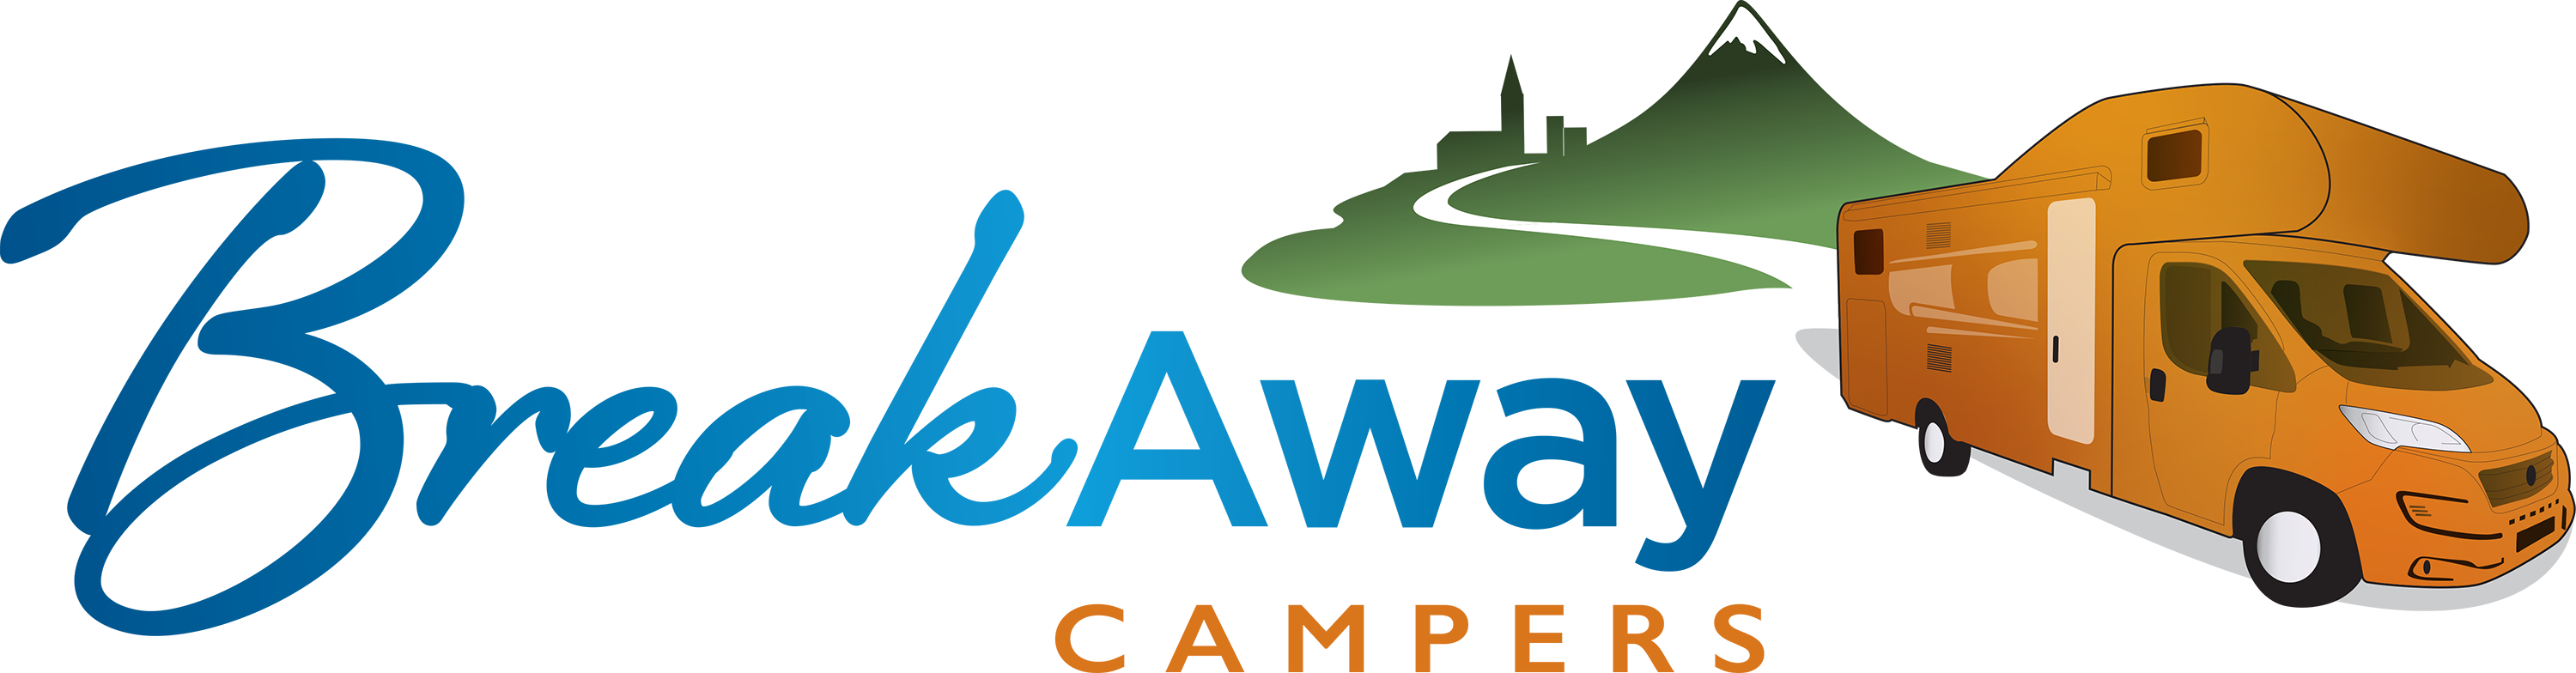 Break-Away-Campers-Logo-1